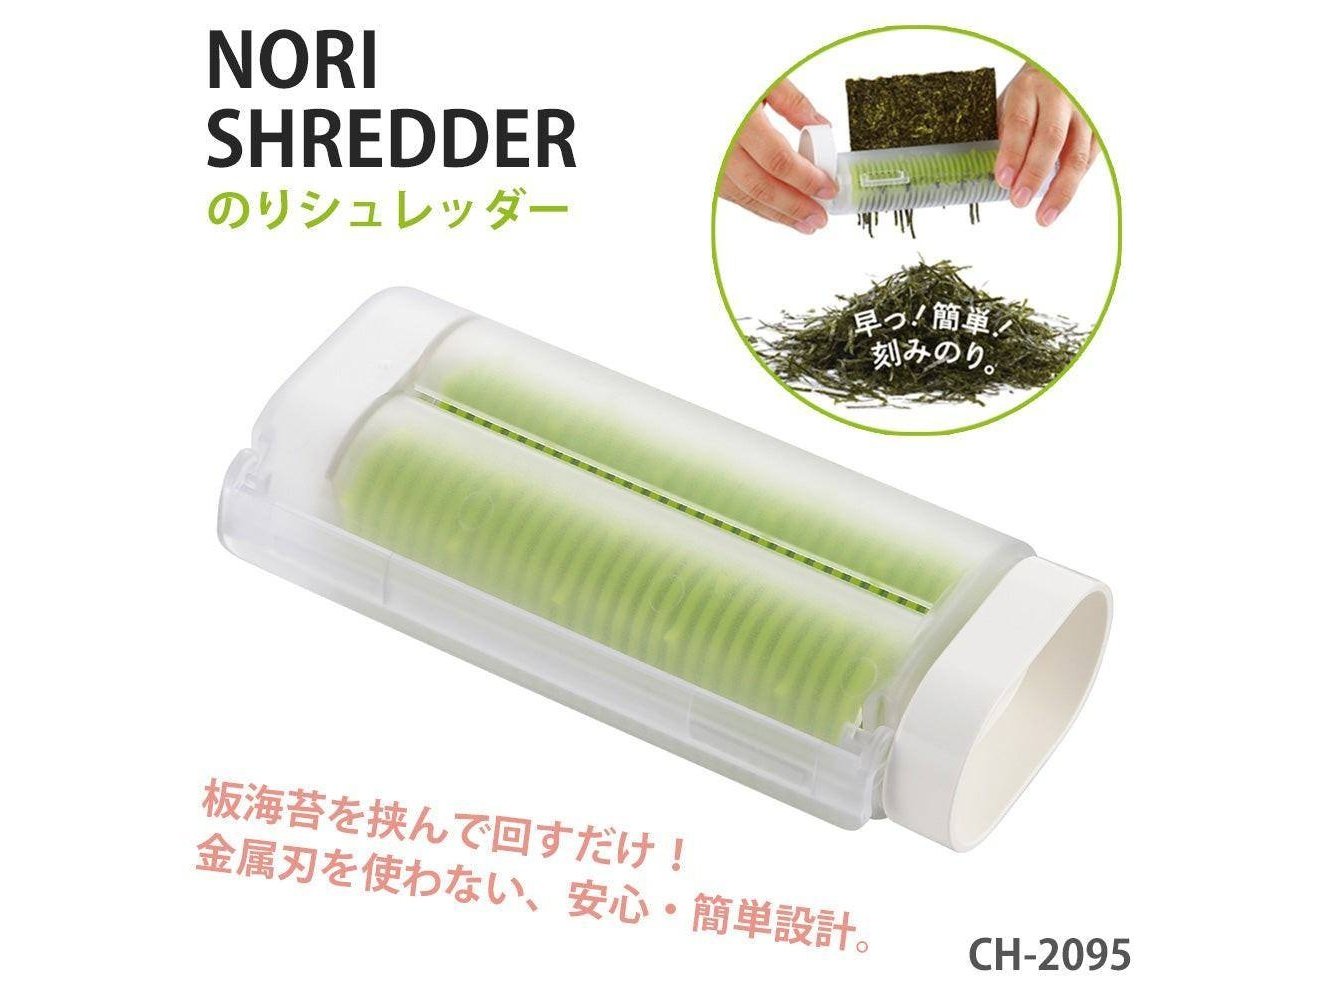 Akebono Seaweed Shredder